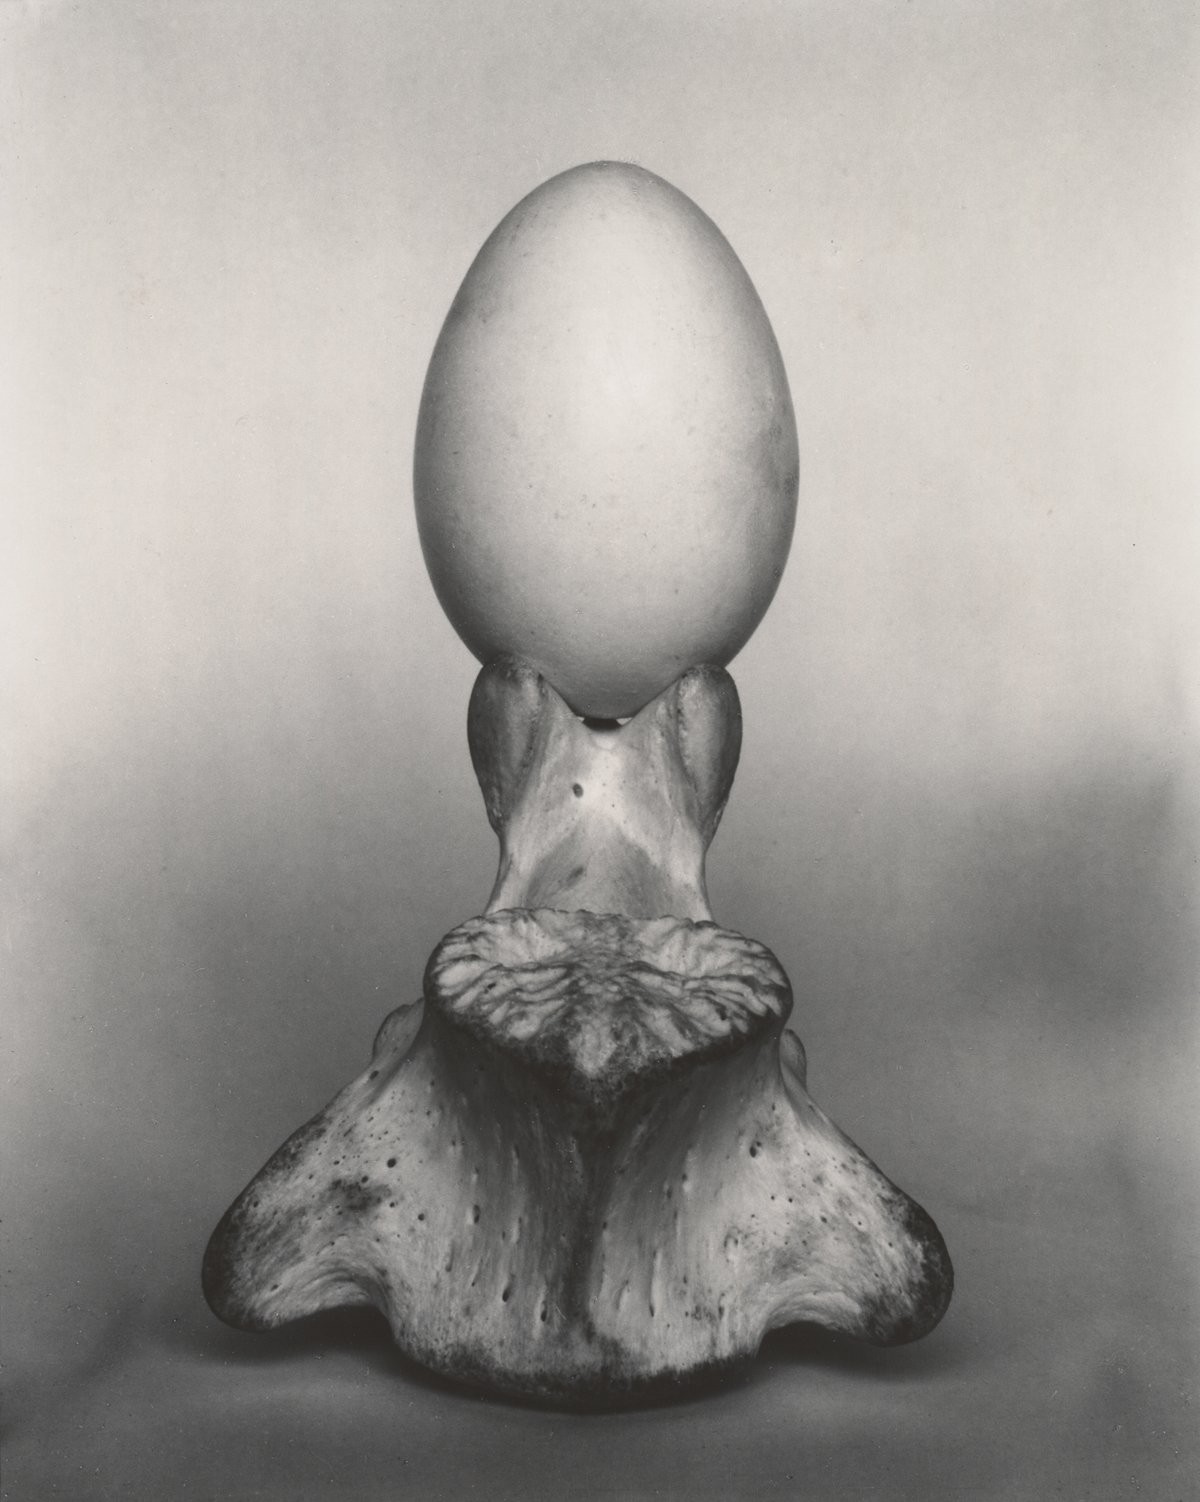 Яйцо на кости, 1930. Фотограф Эдвард Уэстон